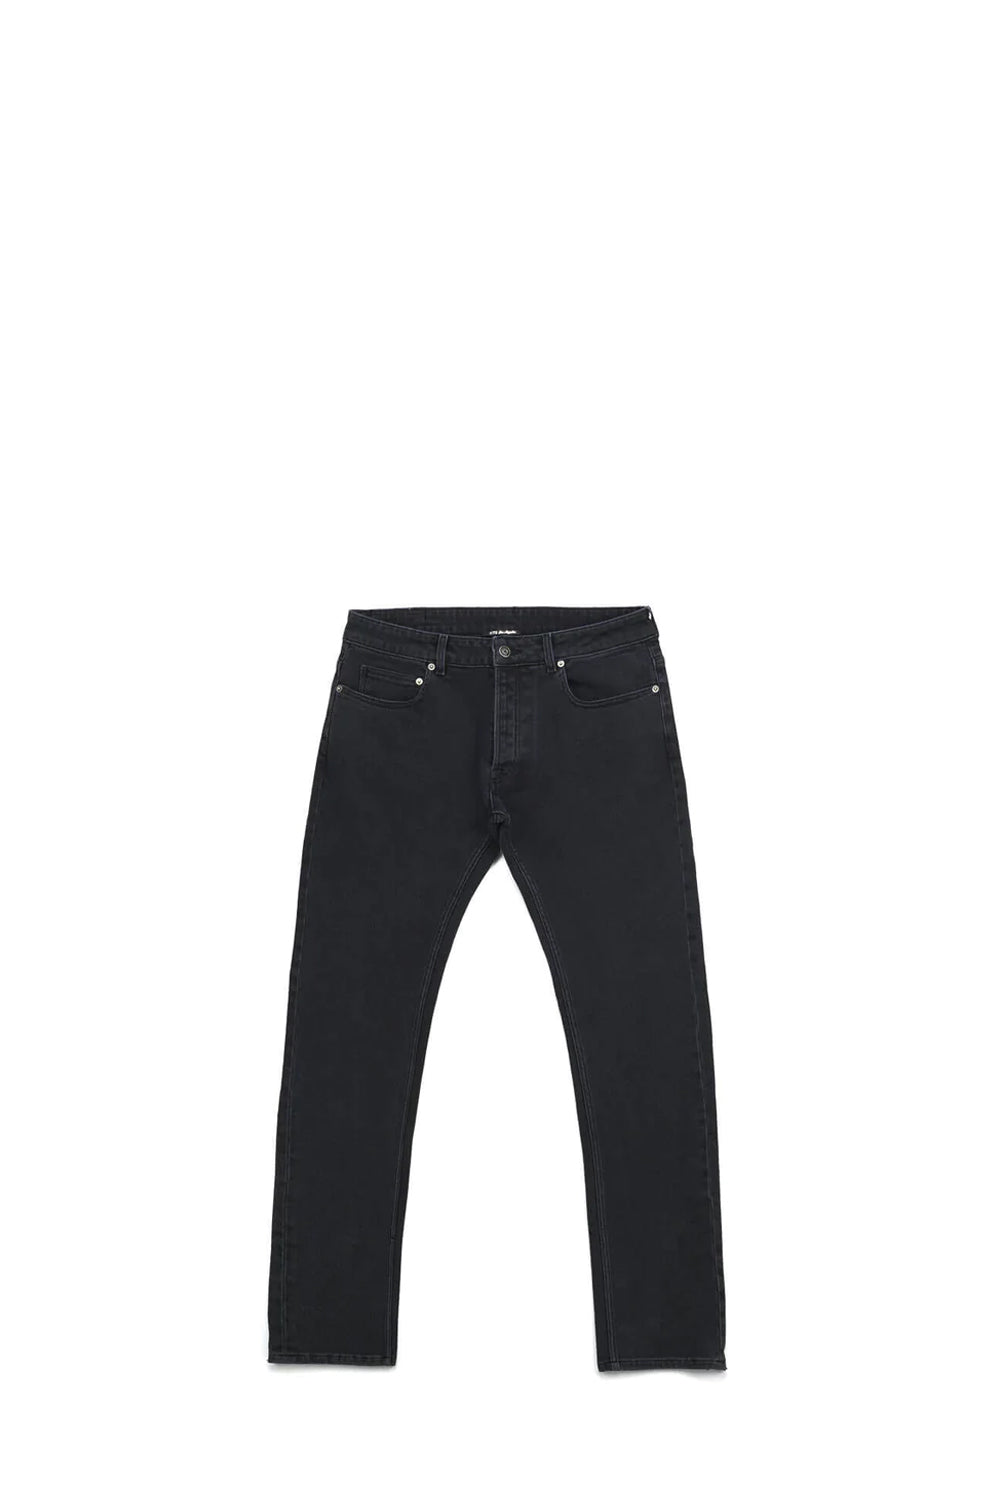 SLIM VINTAGE BLACK Slim fit jeans in black denim, 5 pockets, hidden front button closure. Metallic logo detail on the back. 98% cotton 2% elastane. Made in Italy. HTC LOS ANGELES